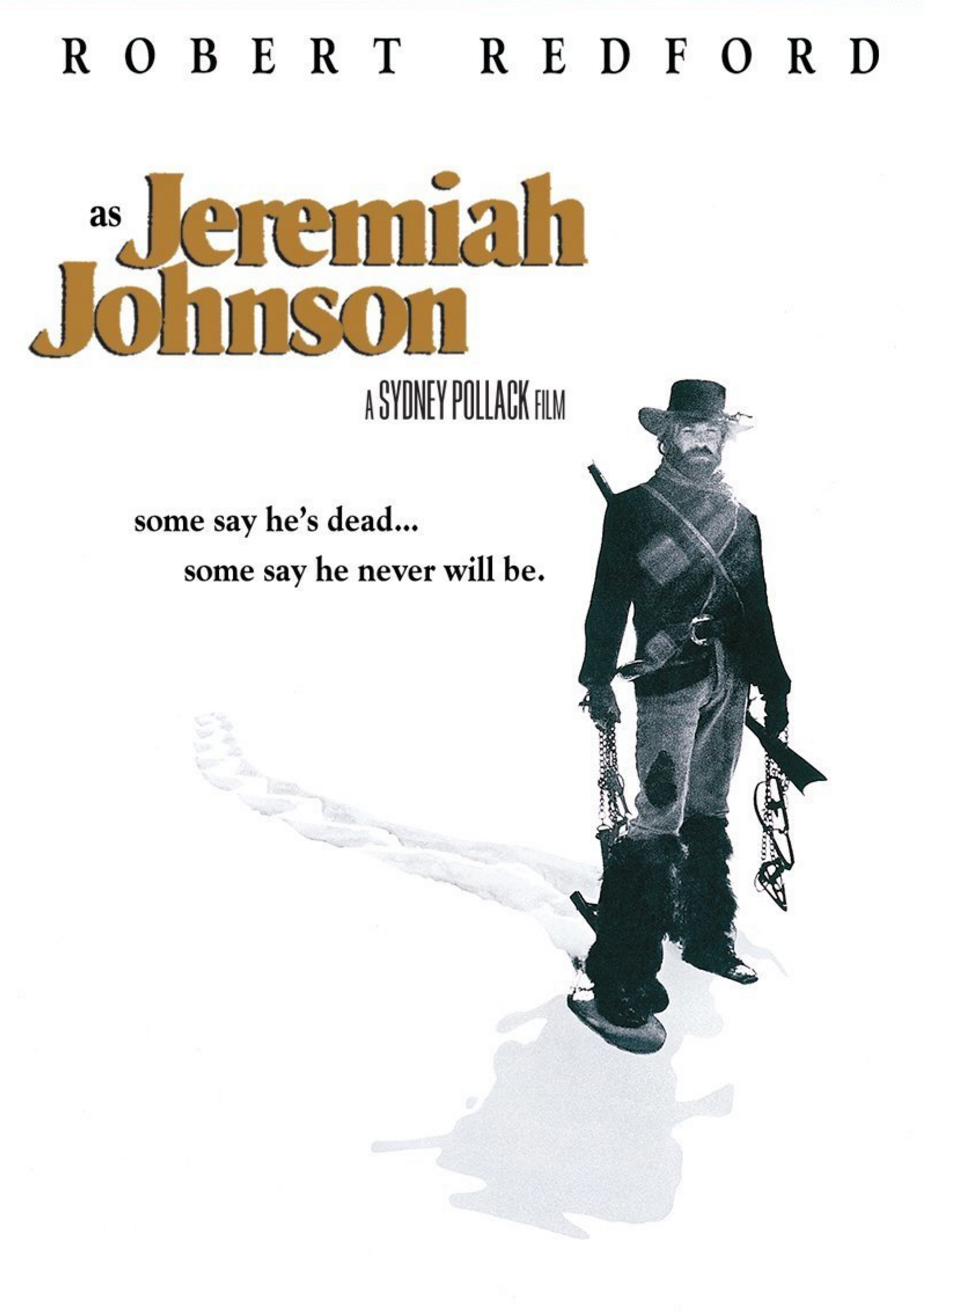 Jeremiah Johnson poster, 1972 film by Sydney Pollack, starring Robert Redford.